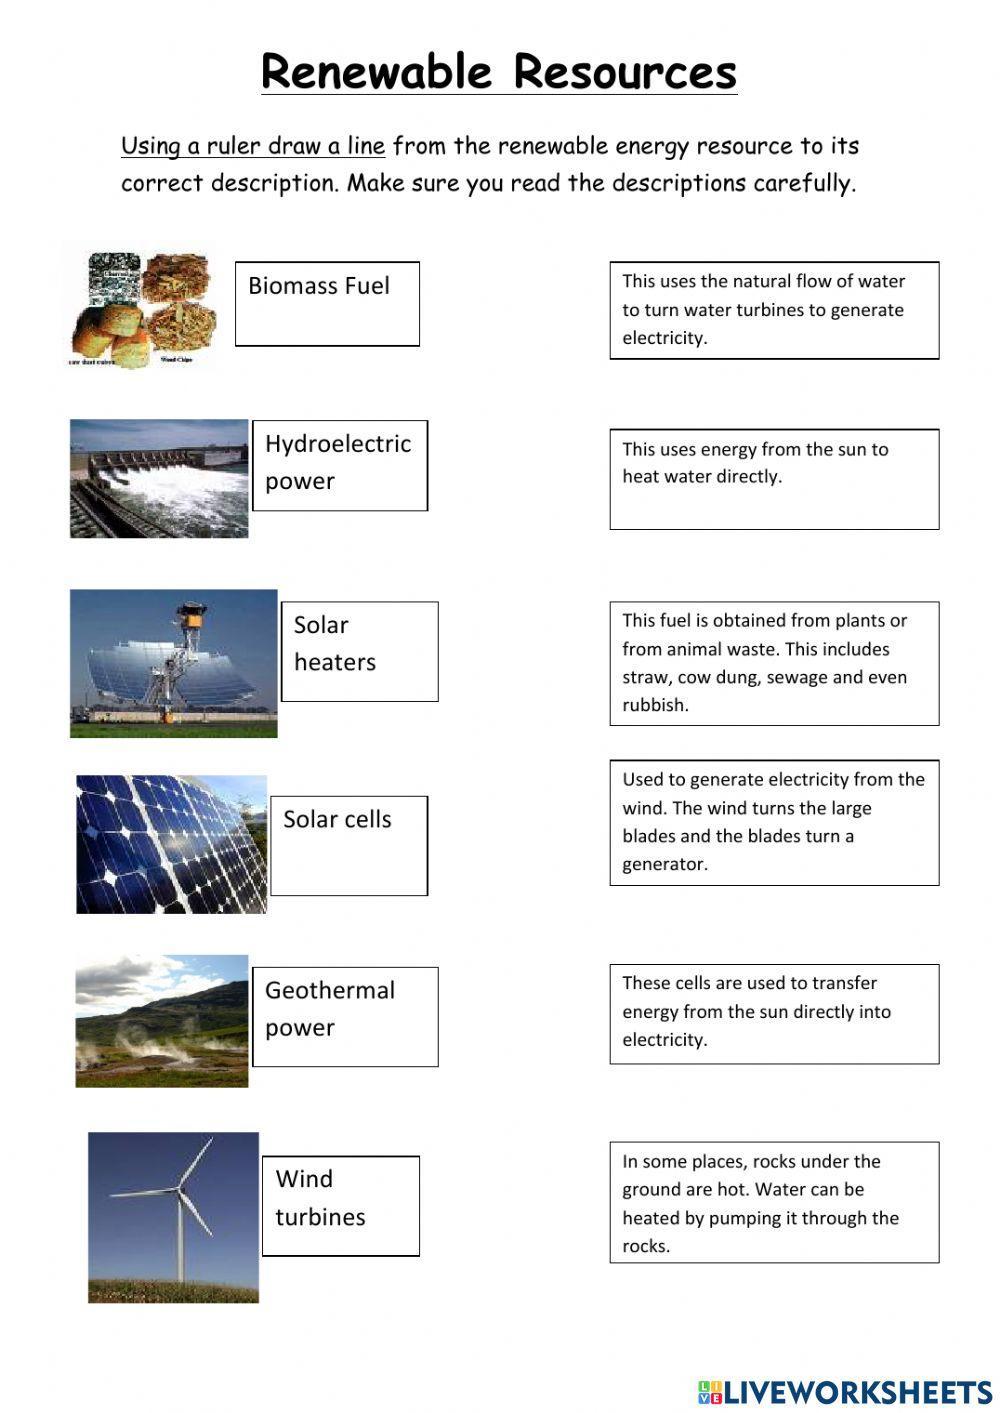 Renewable Energy Sources match up